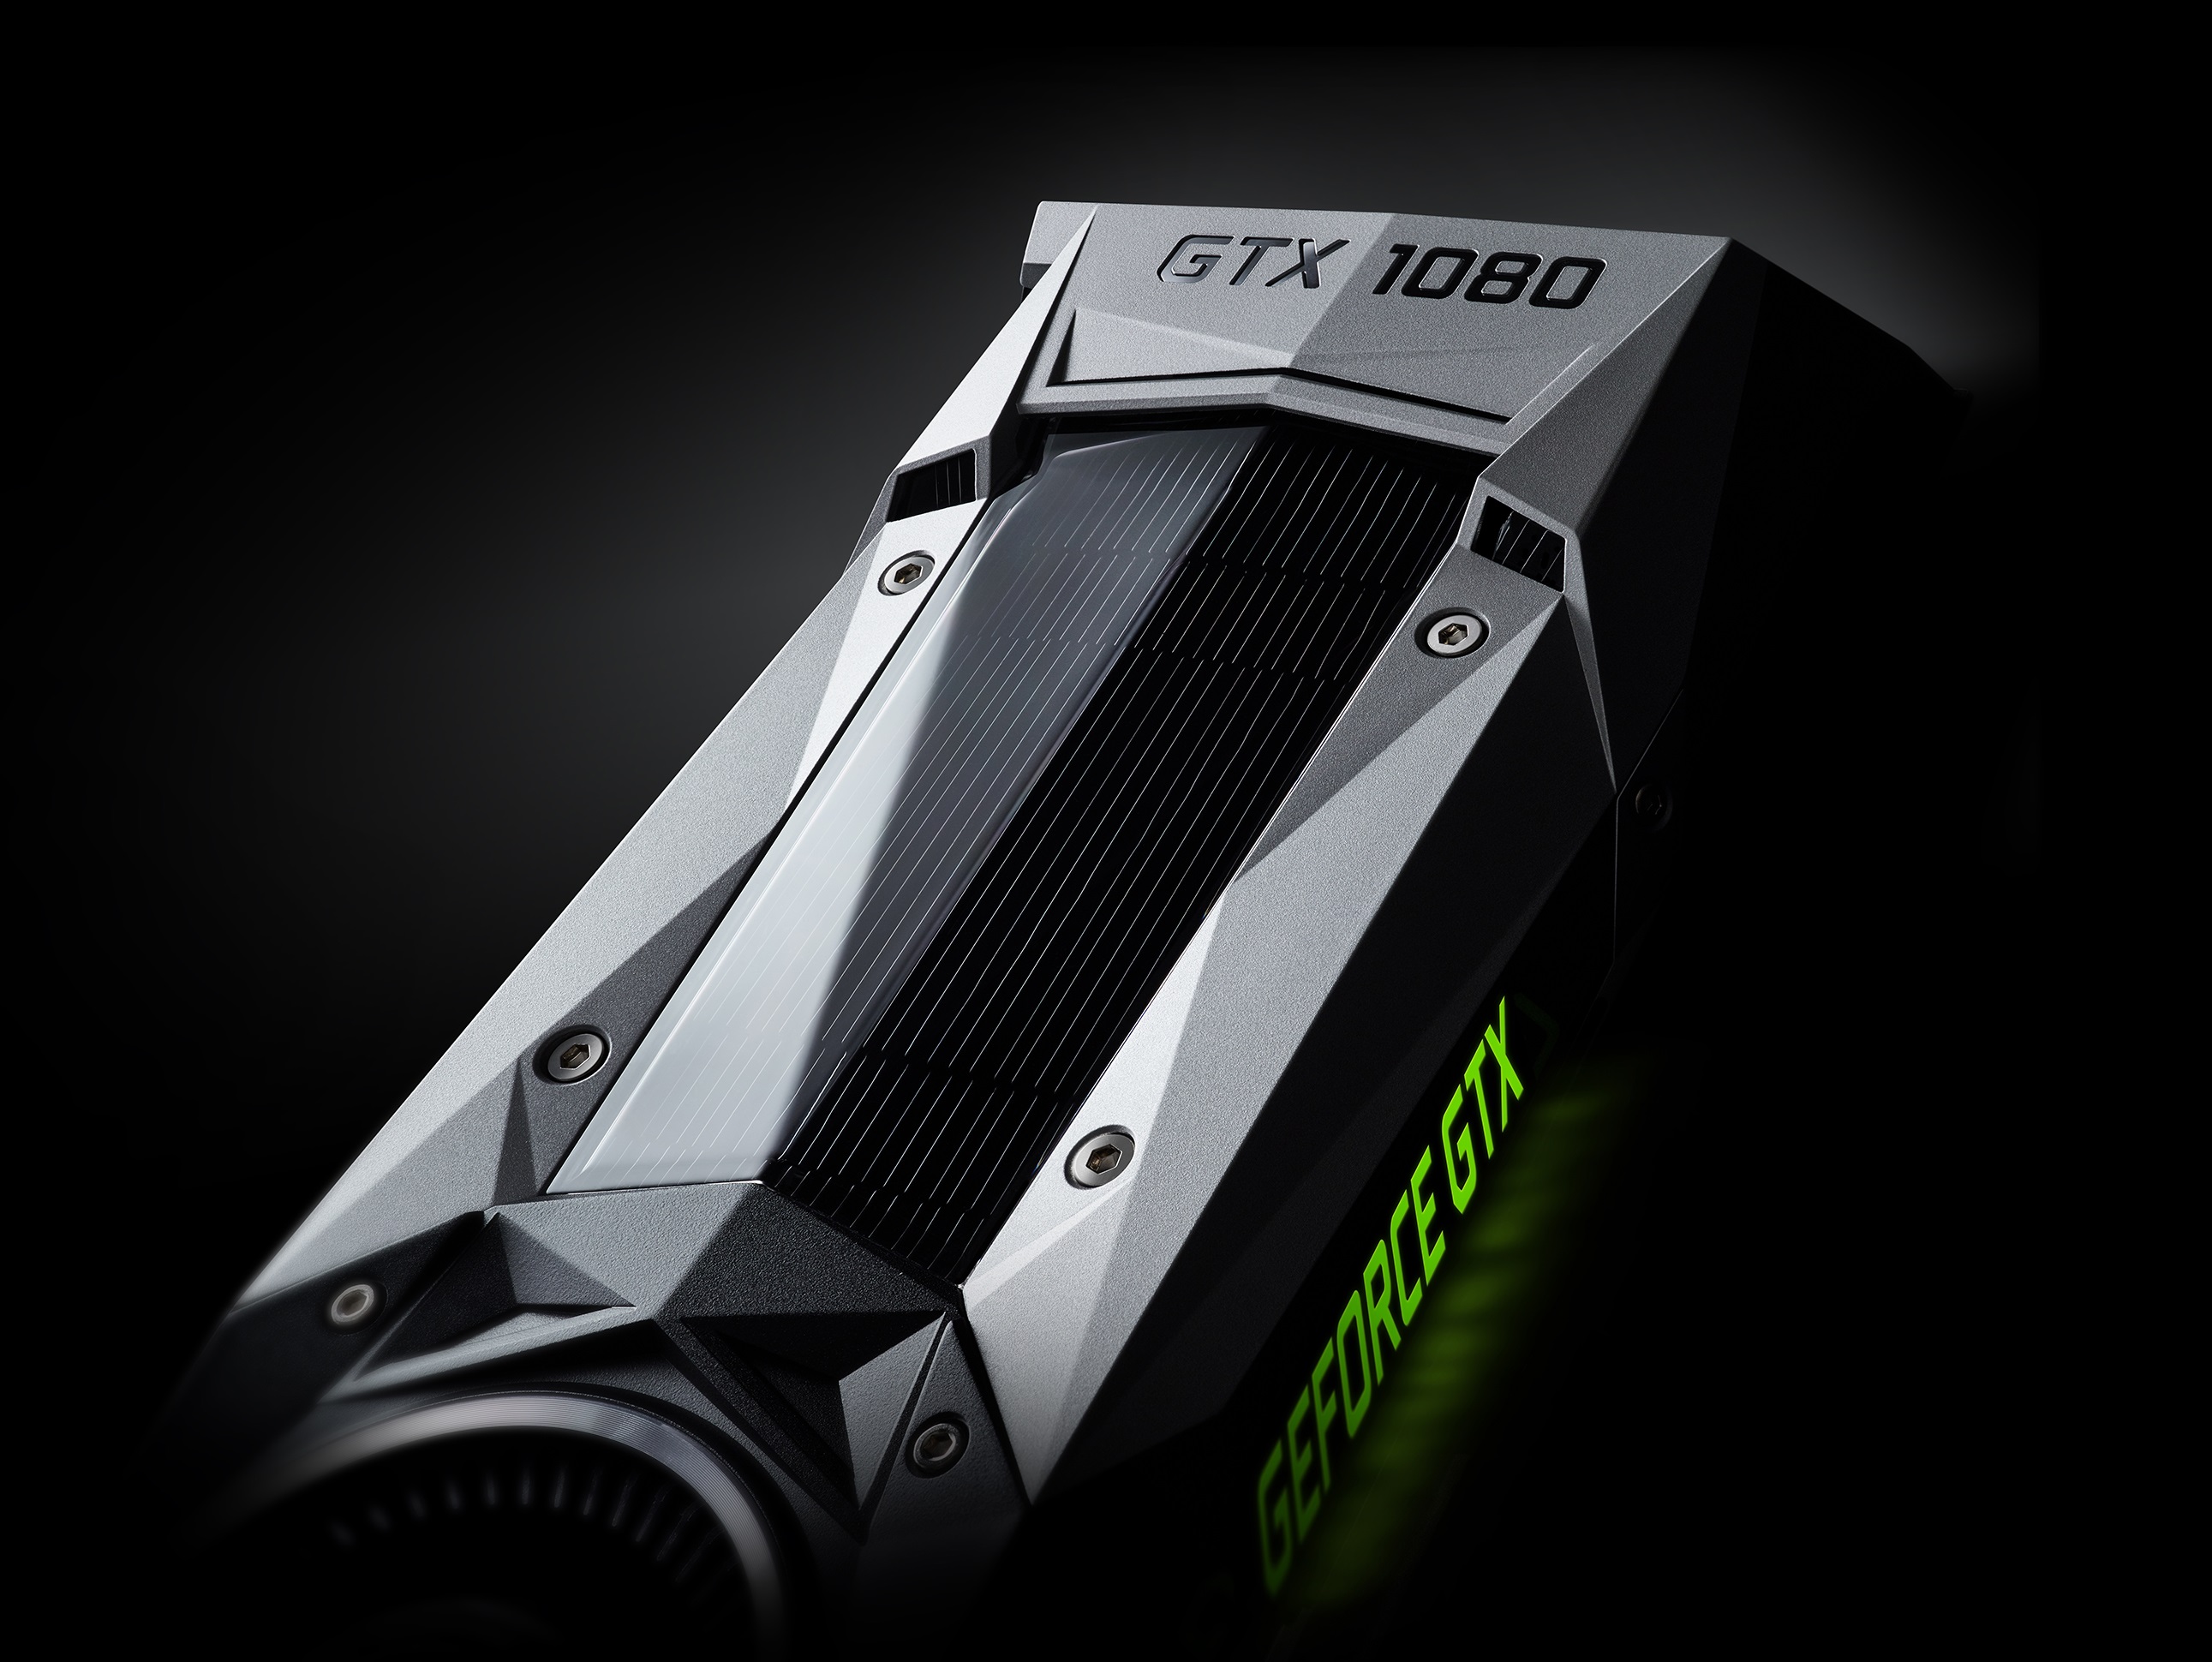 NVIDIA GeForce GTX 1080 official 01